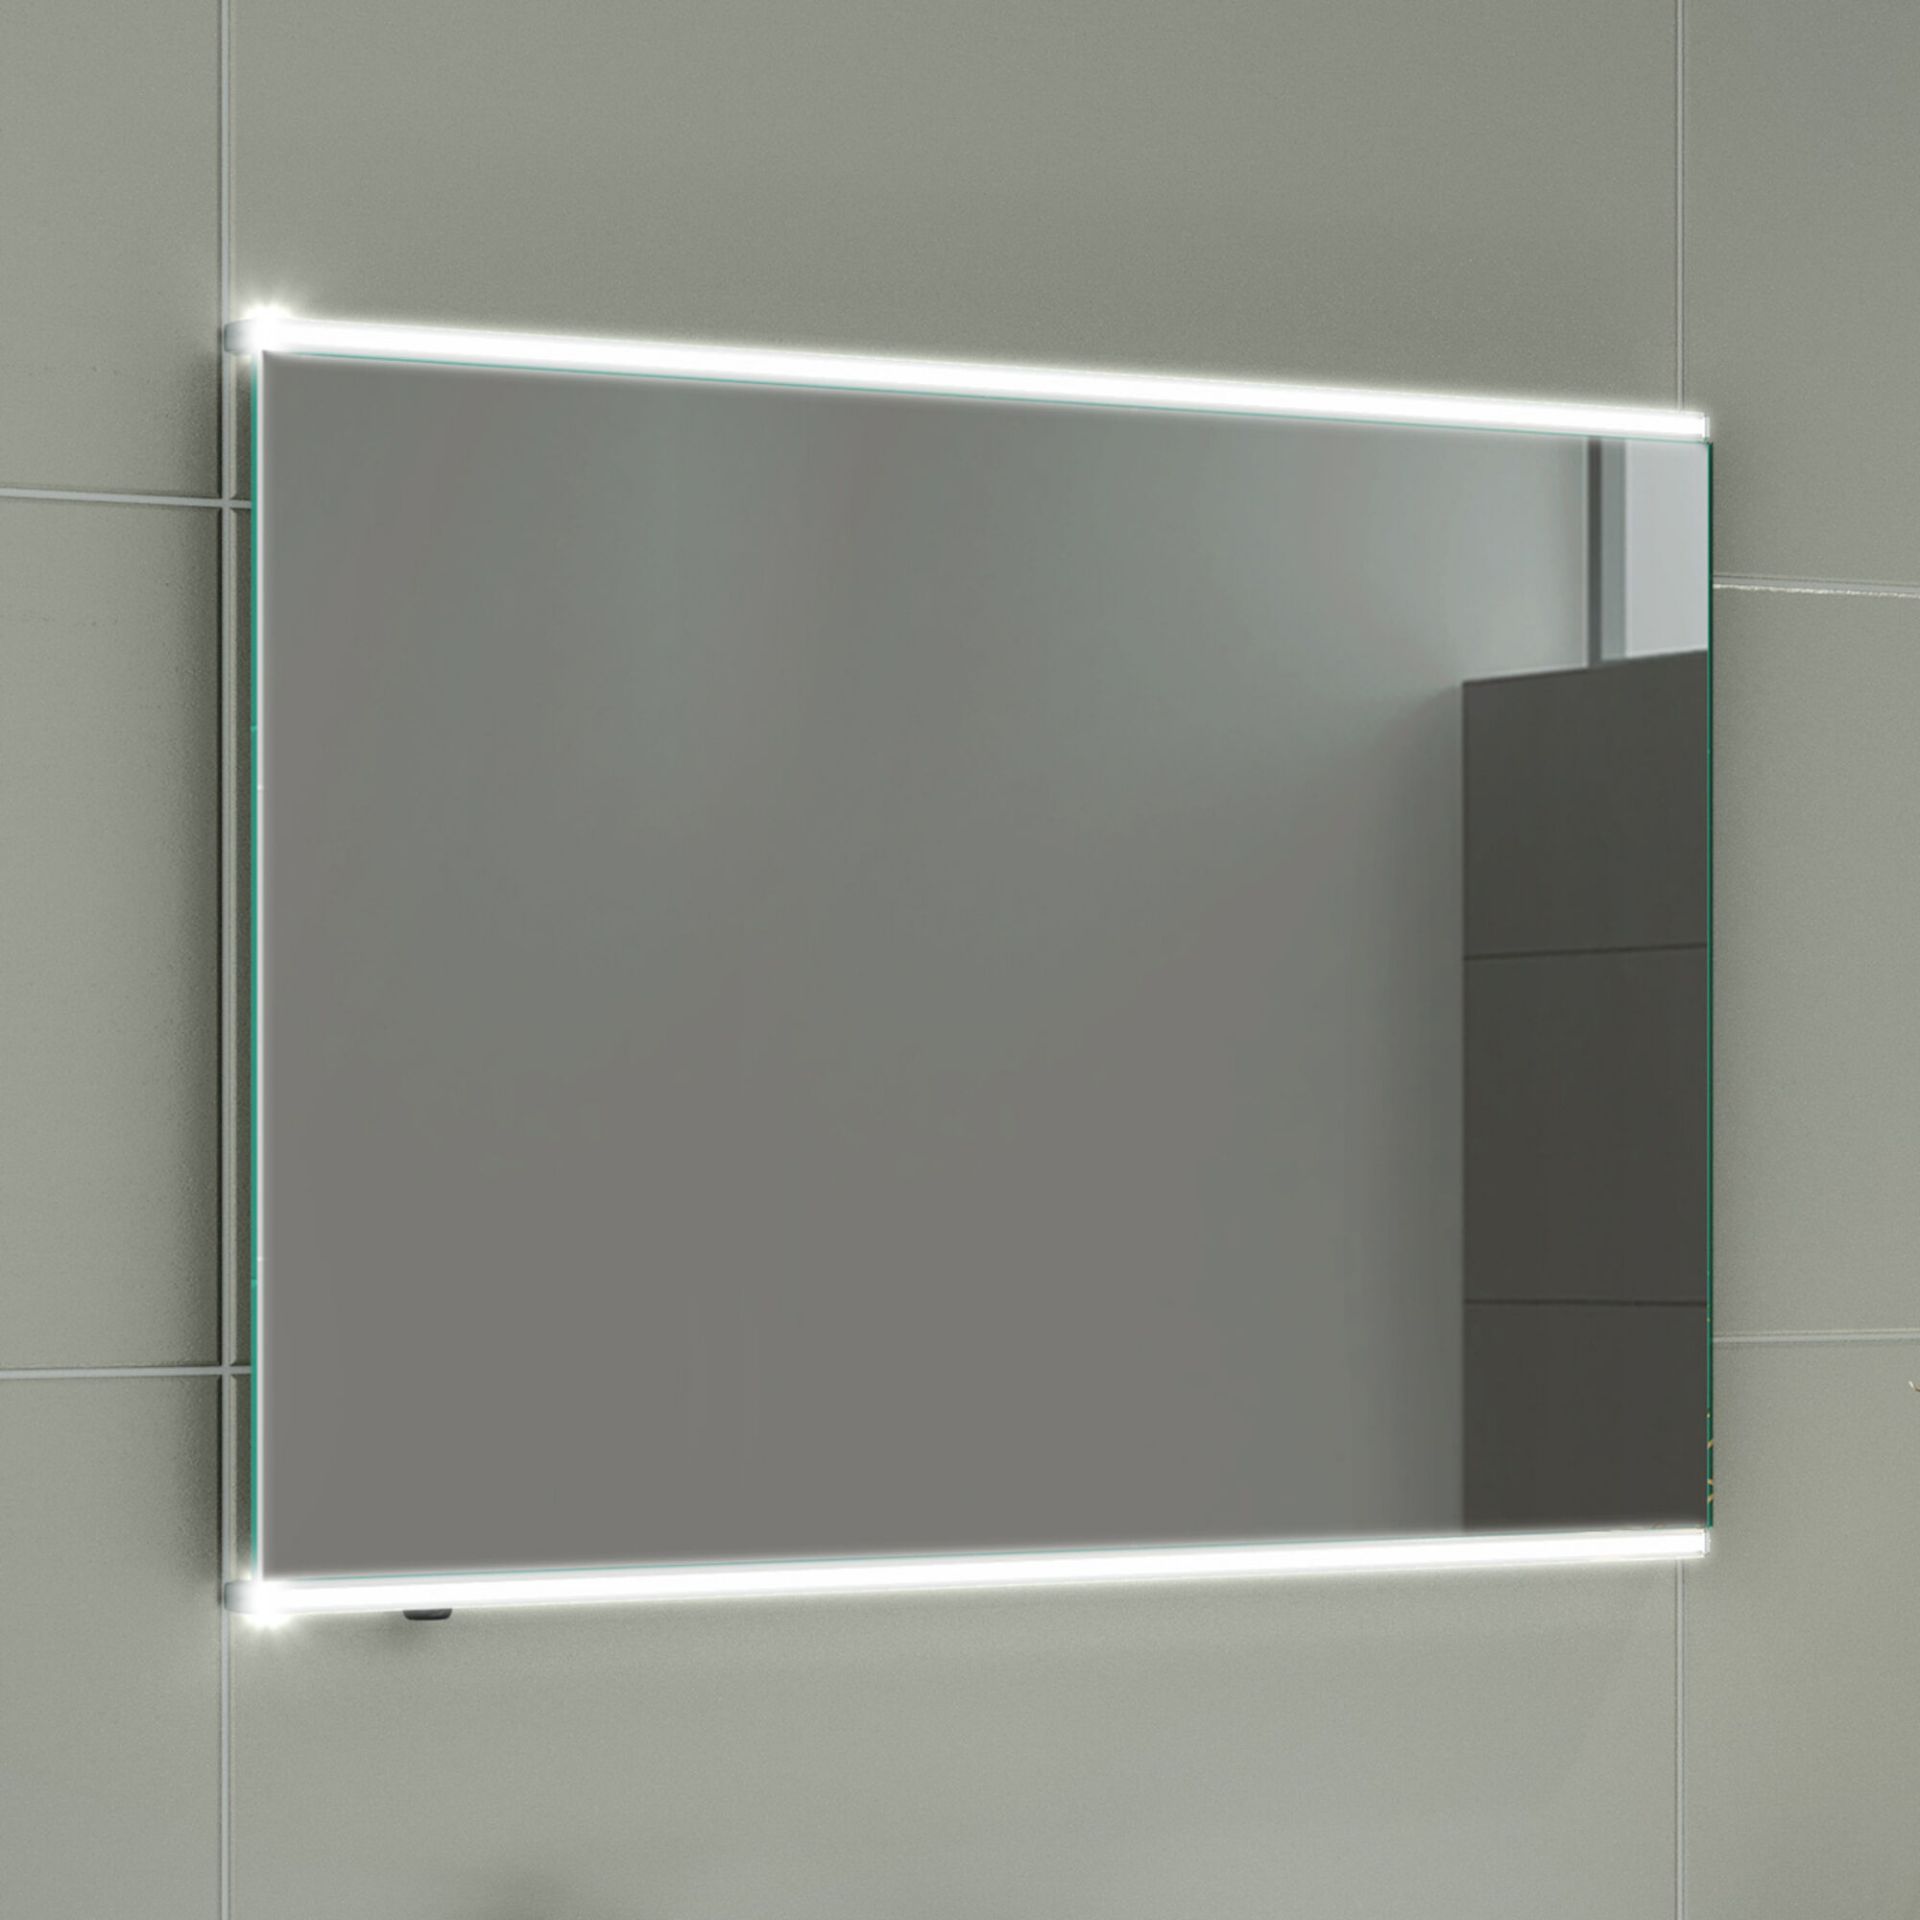 (CC34) 450x600mm Denver Illuminated LED Mirror. RRP £349.99. Energy efficient LED lighting wit...